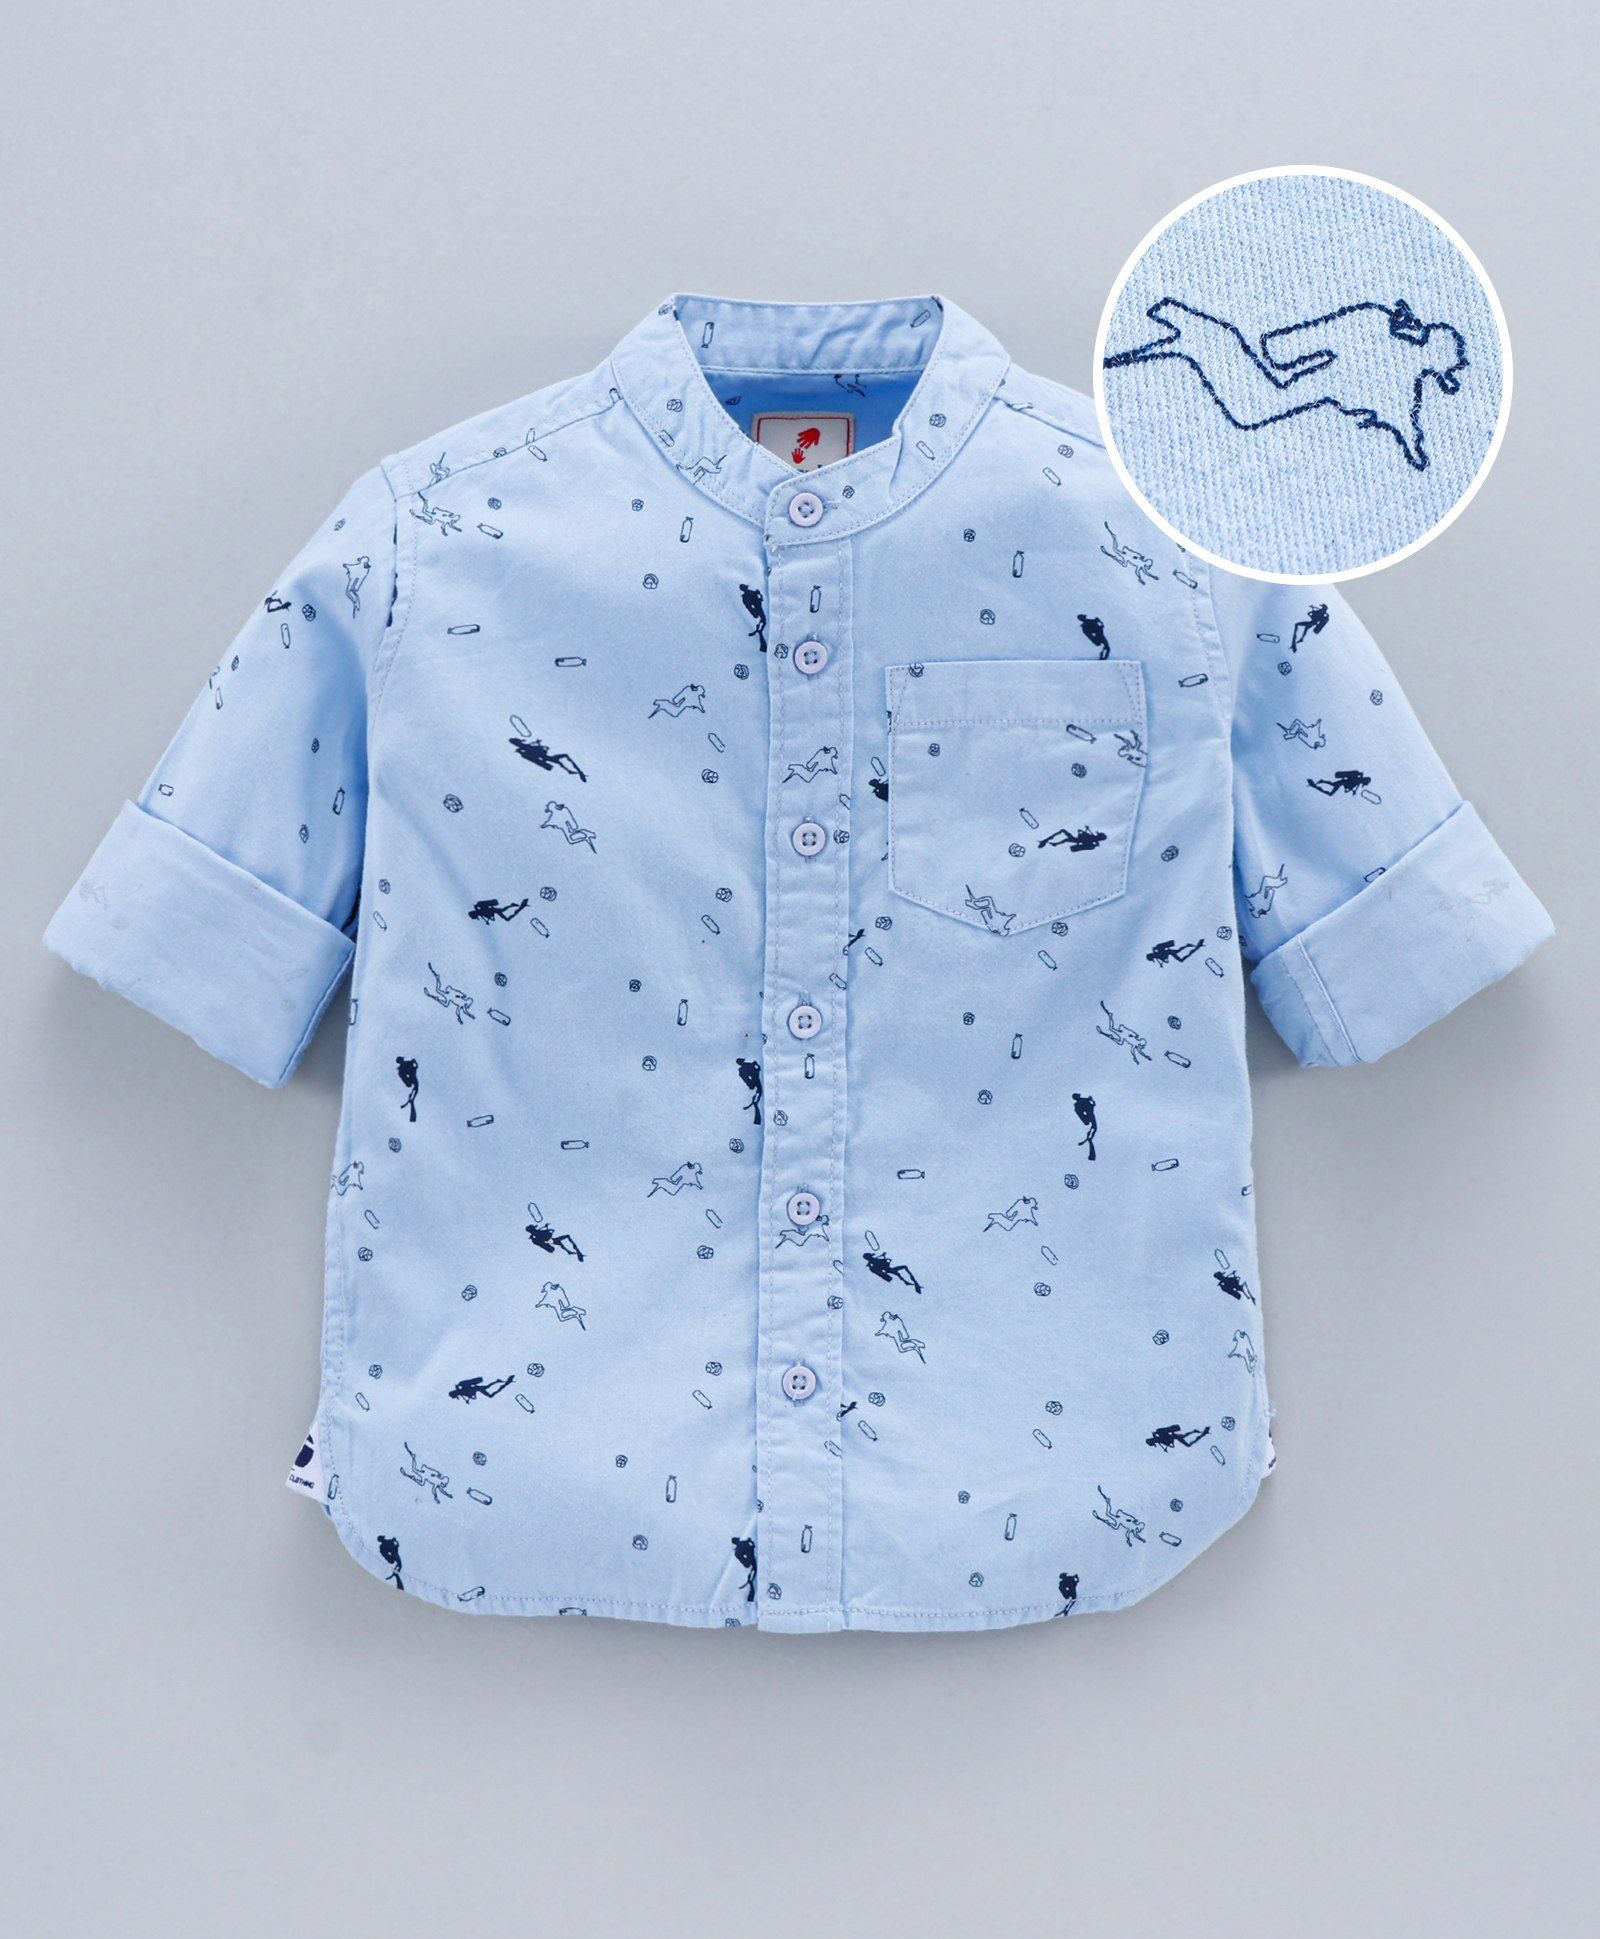 Full Sleeve Abstract Print Bio Wash Shirt - Light Blue